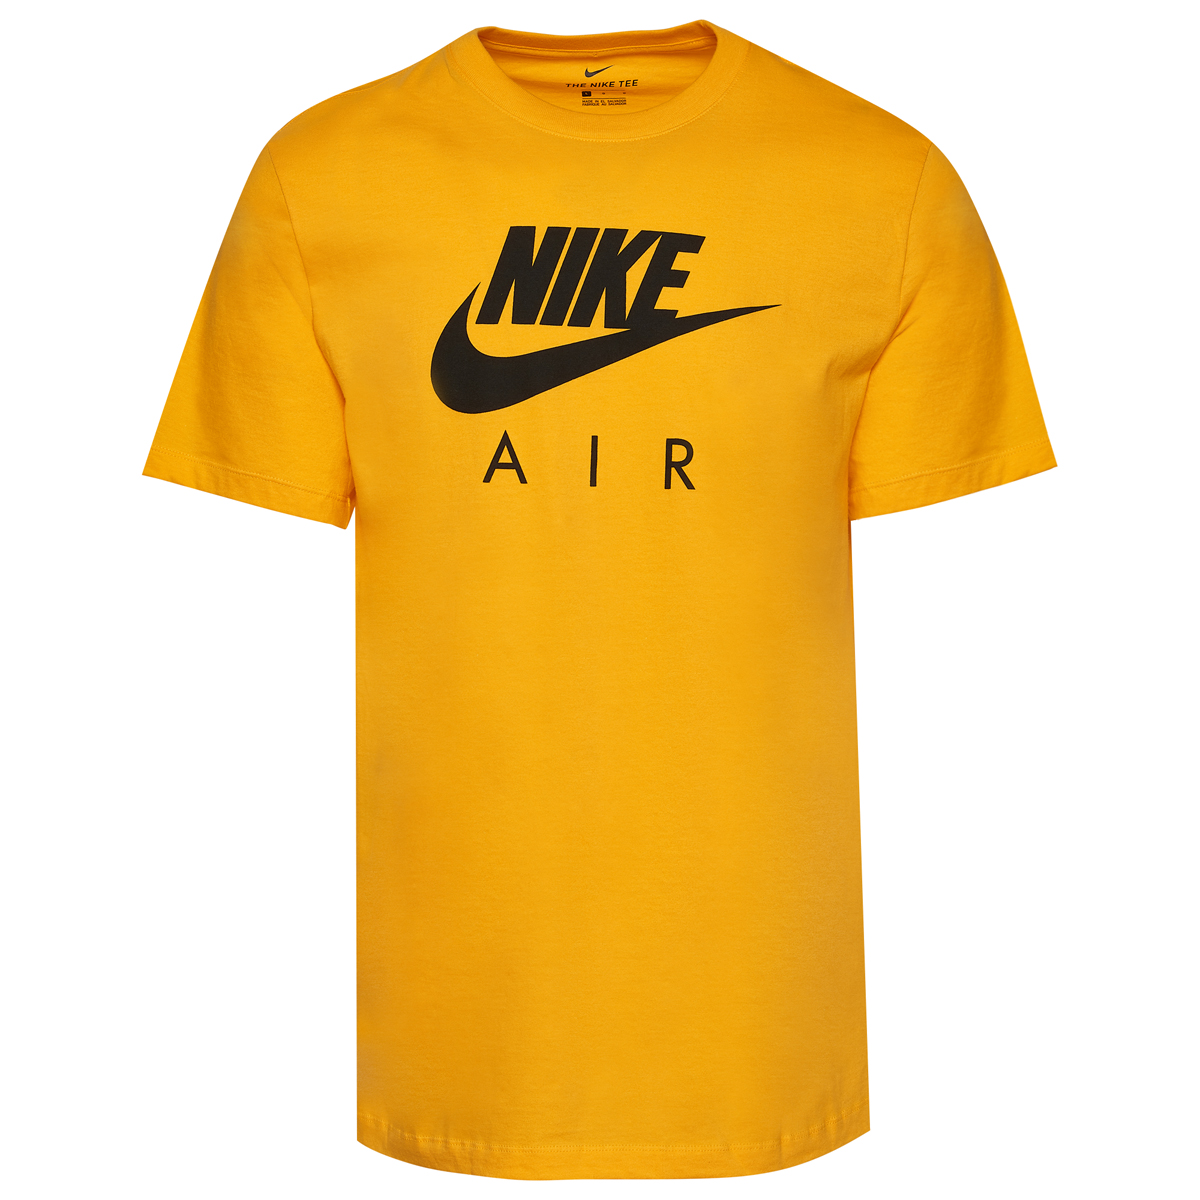 Nike Air Futura T Shirt Yellow Gold Black